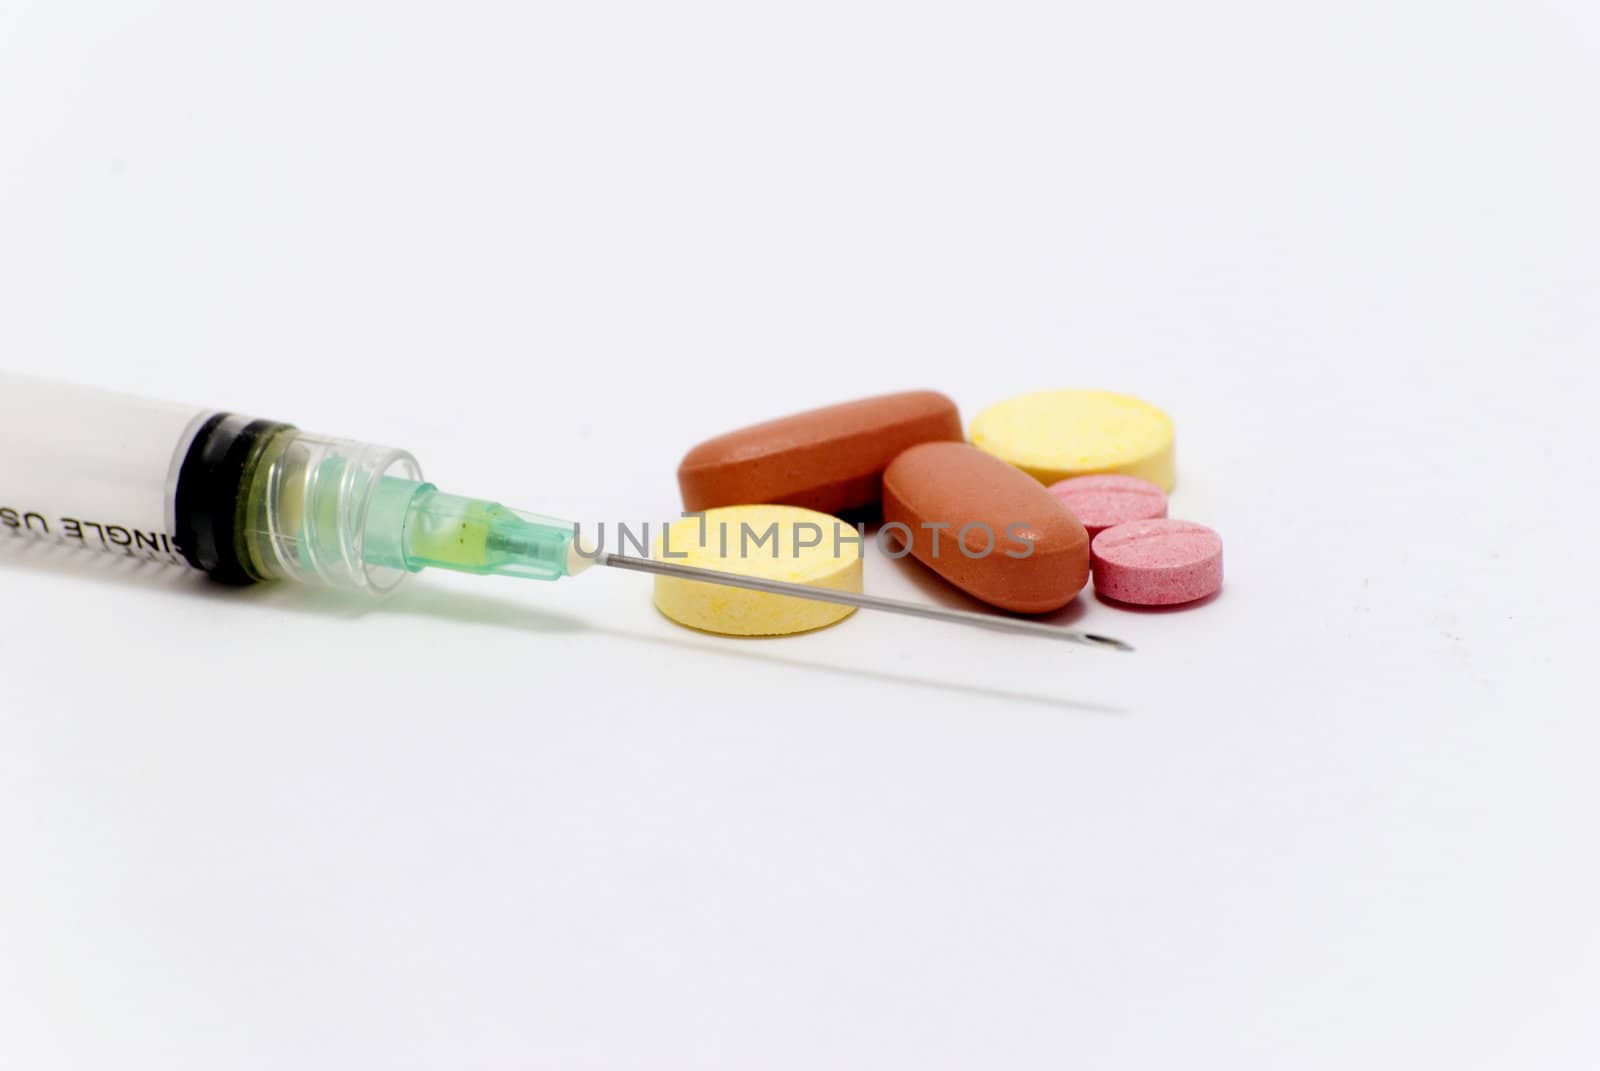 syringe and pills on white background